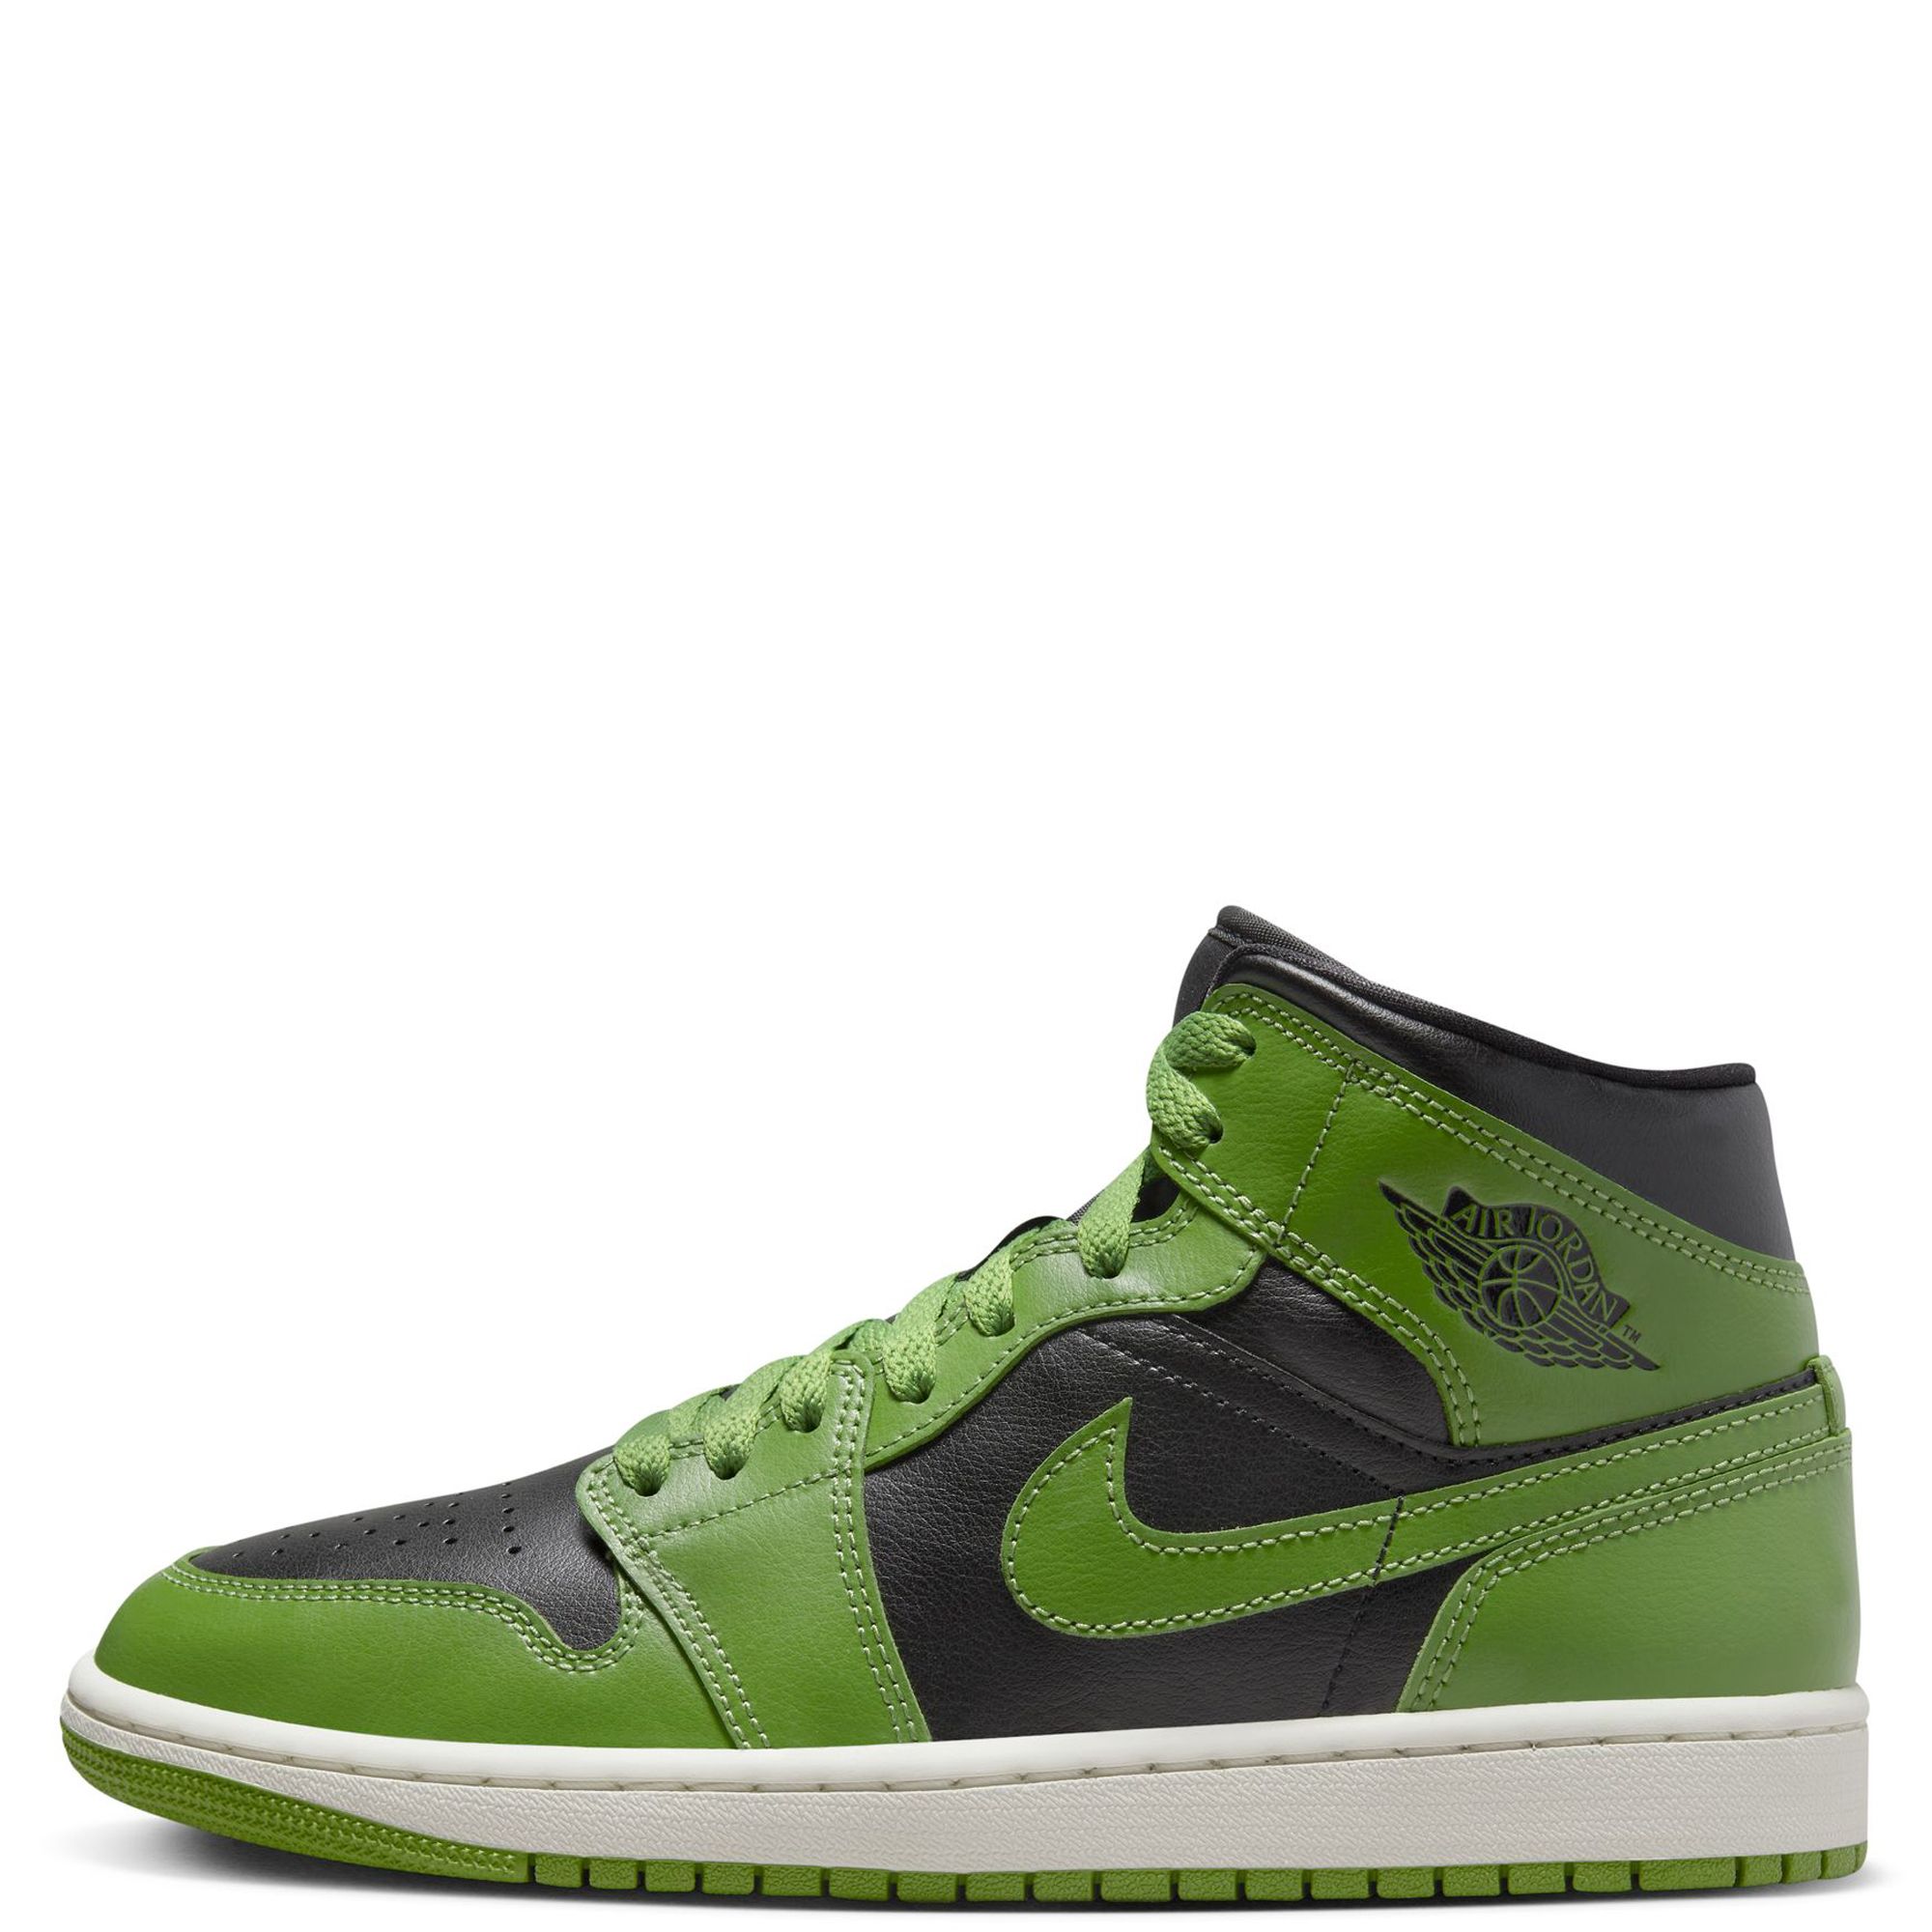 Jordan Zoom Separate Basketball Shoes, Men's, Navy/Green/Blue